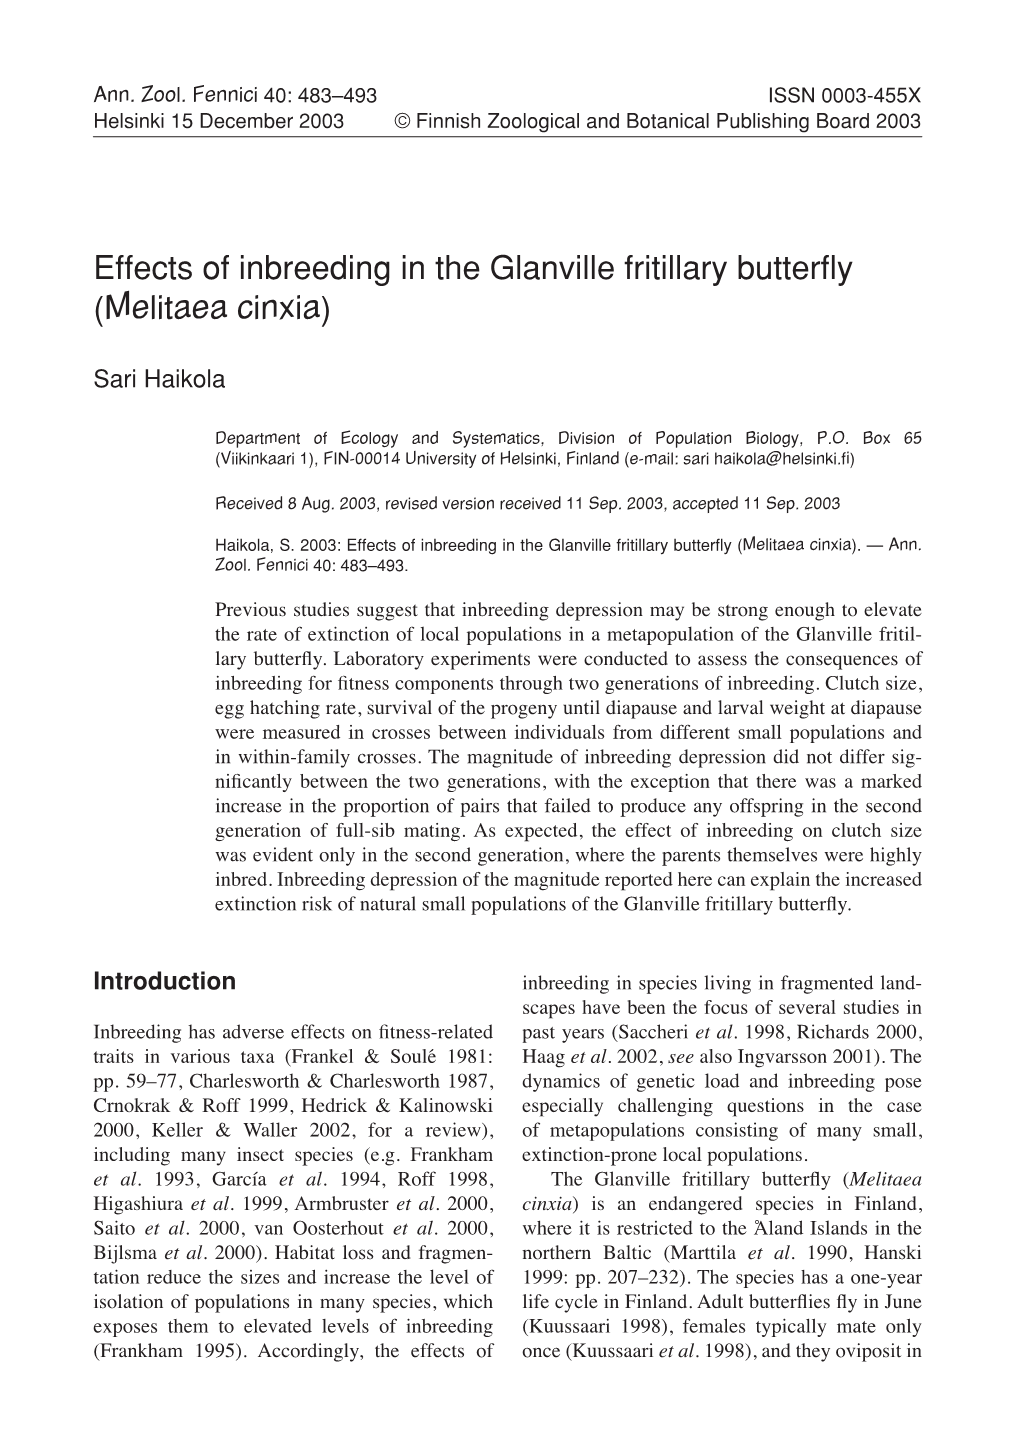 Effects of Inbreeding in the Glanville Fritillary Butterfly (Melitaea Cinxia)